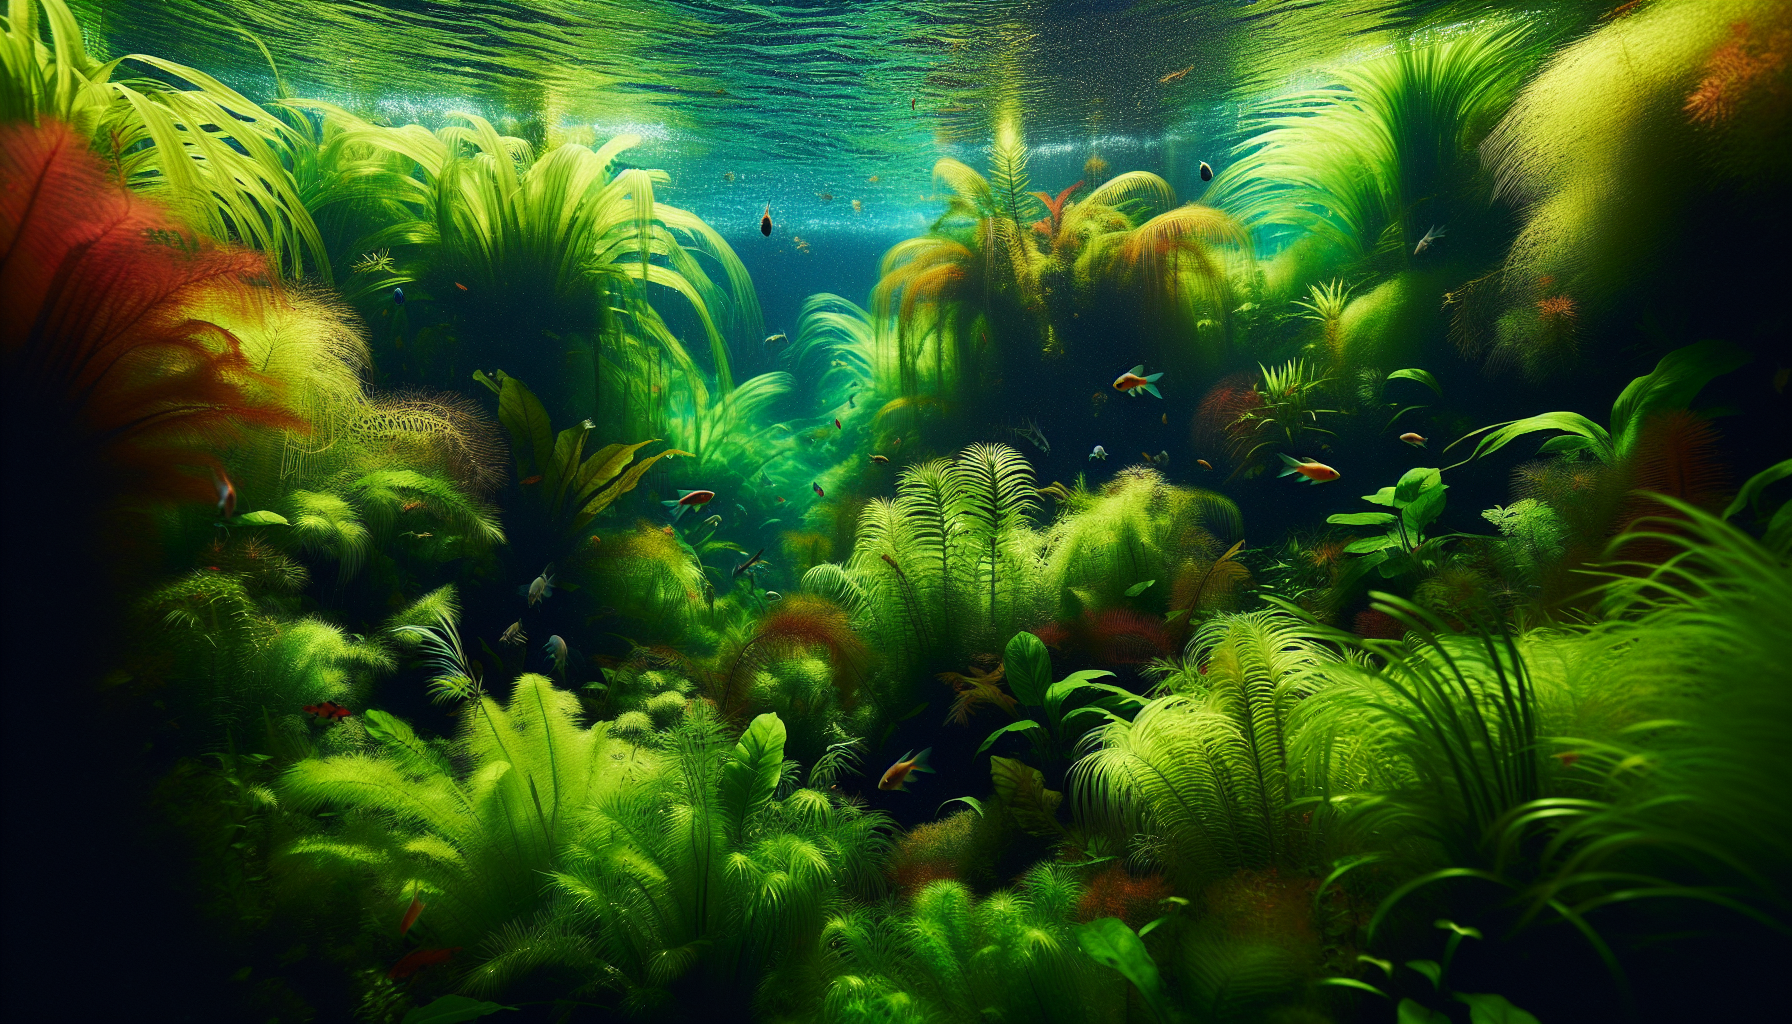 A beautiful aquascape with live plants providing hiding spots for fish